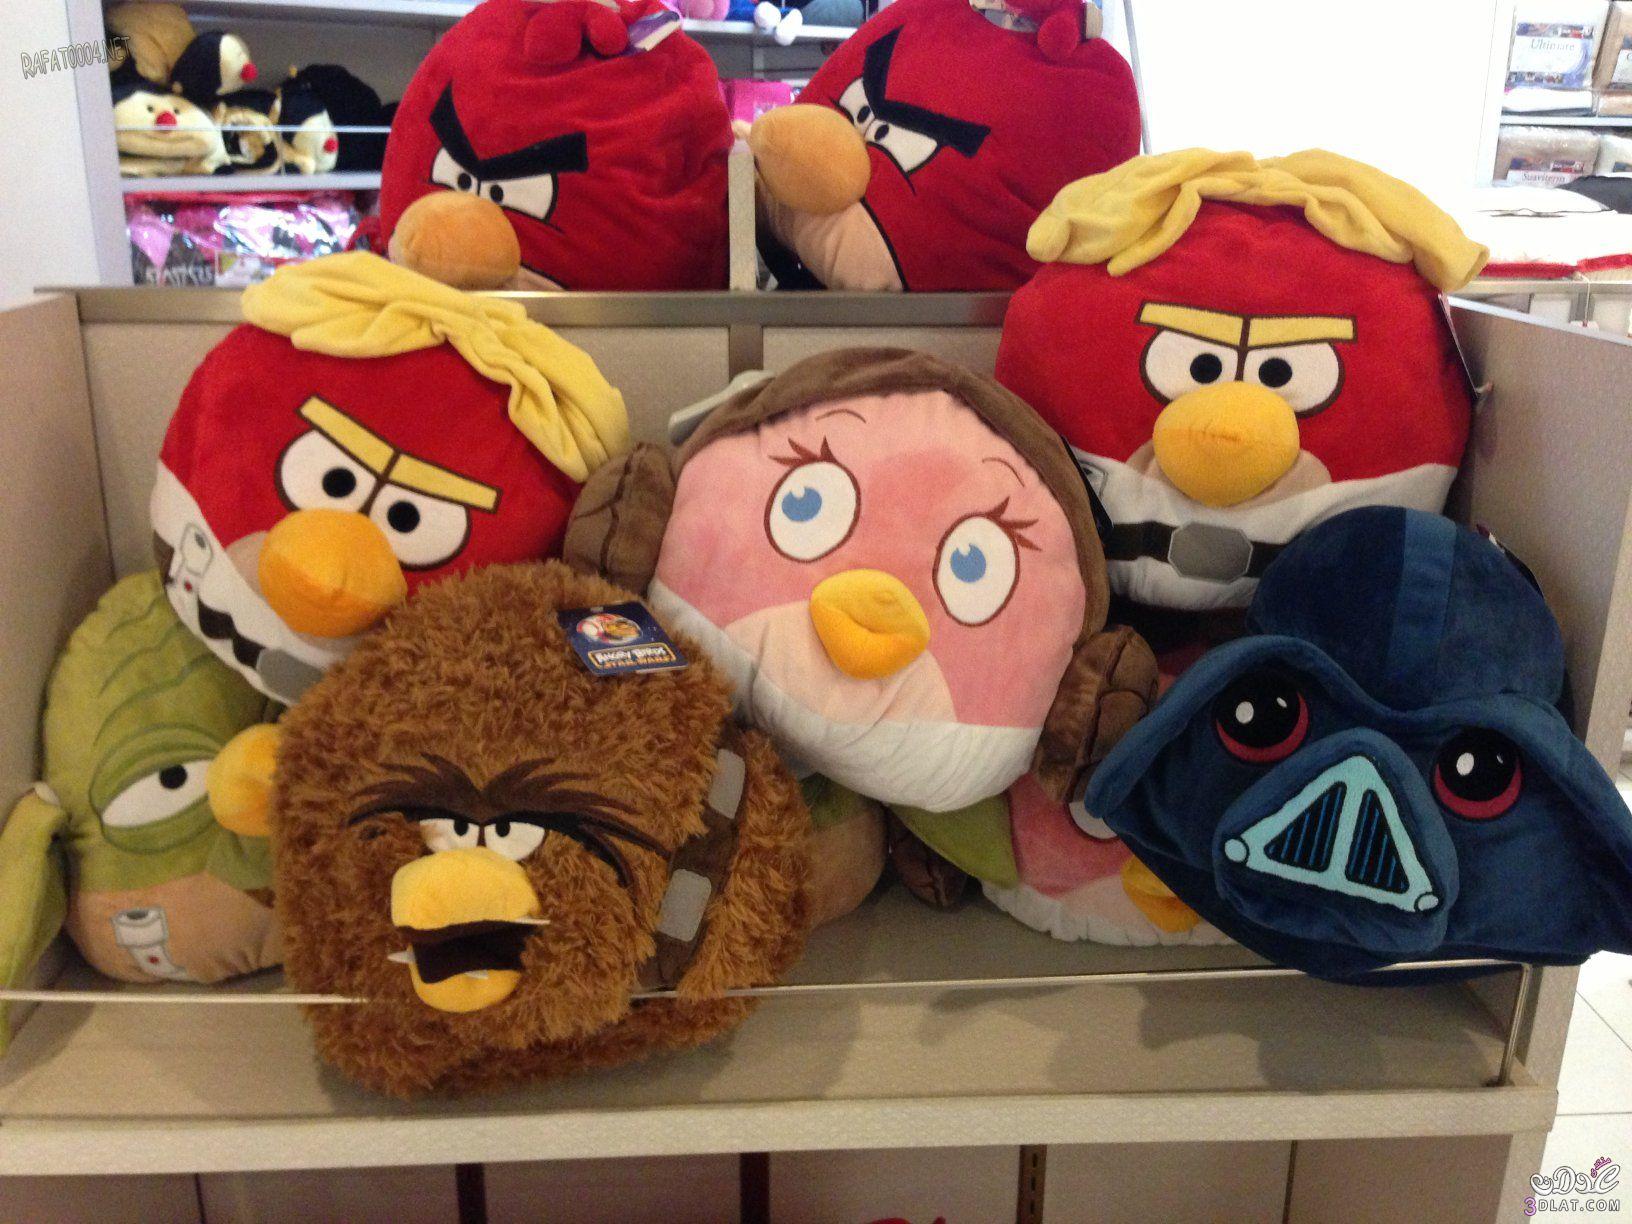 Pads Angry Birds وسادات الطيور الغاضبة ,بالصور وسادات جميلة على اشكال طيور غاضبة